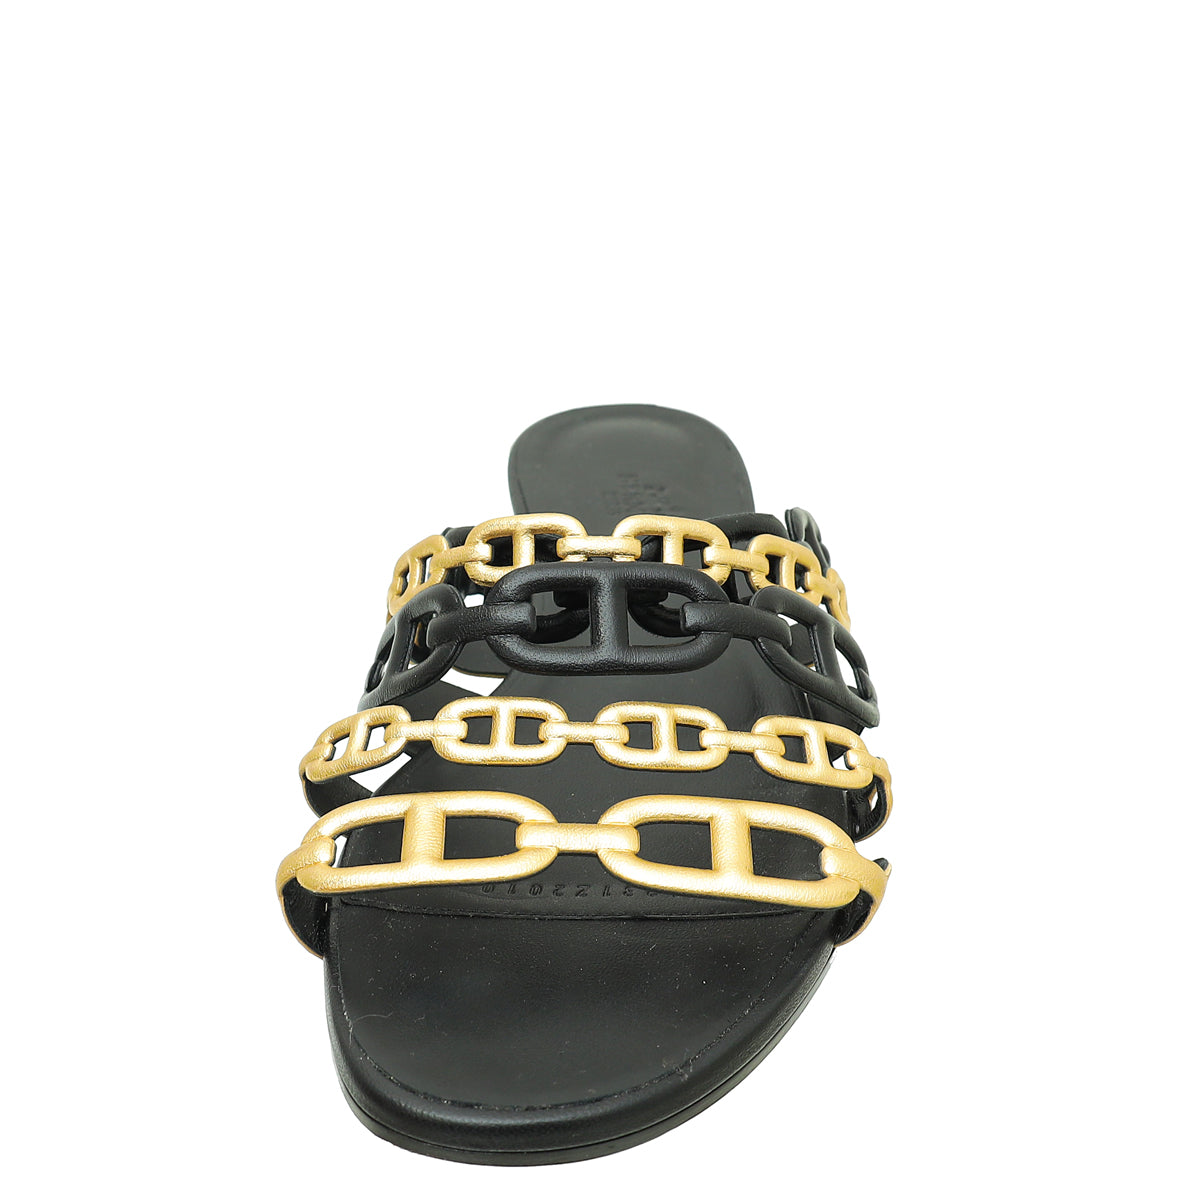 Hermes Thalassa leather sandal Size 38, Black & Gold | eBay